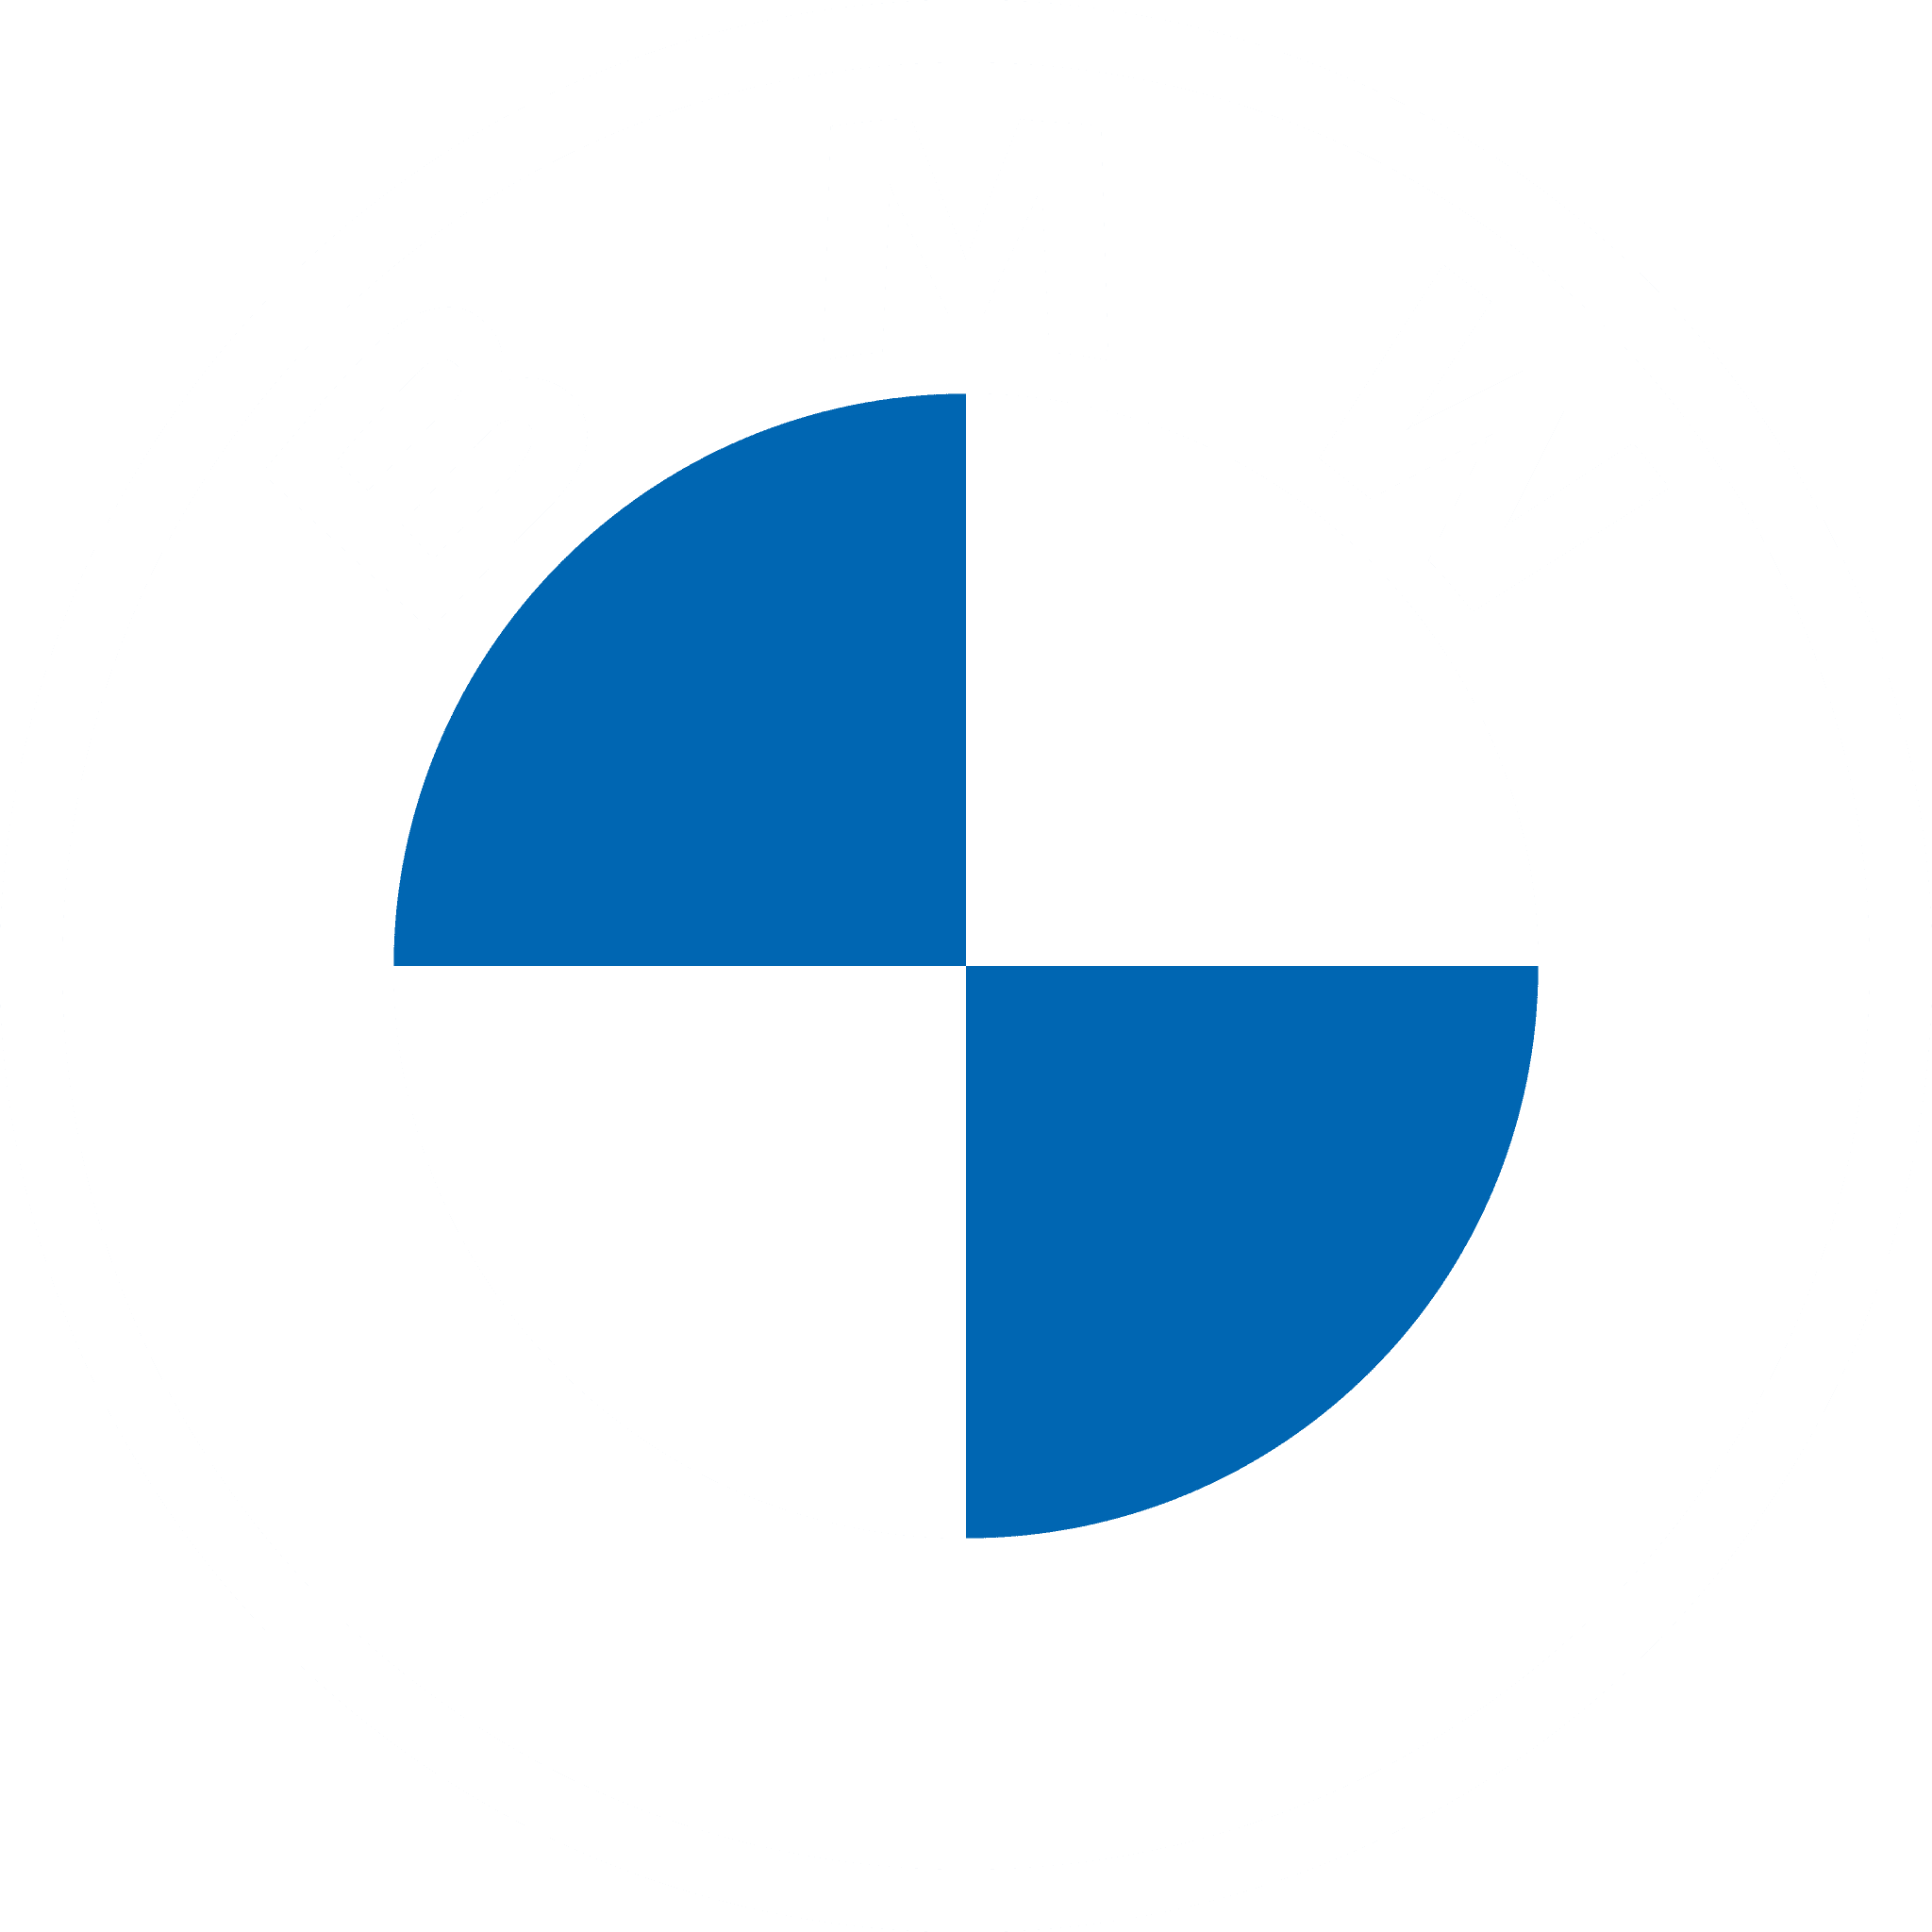 Bmw logo - Social media & Logos Icons